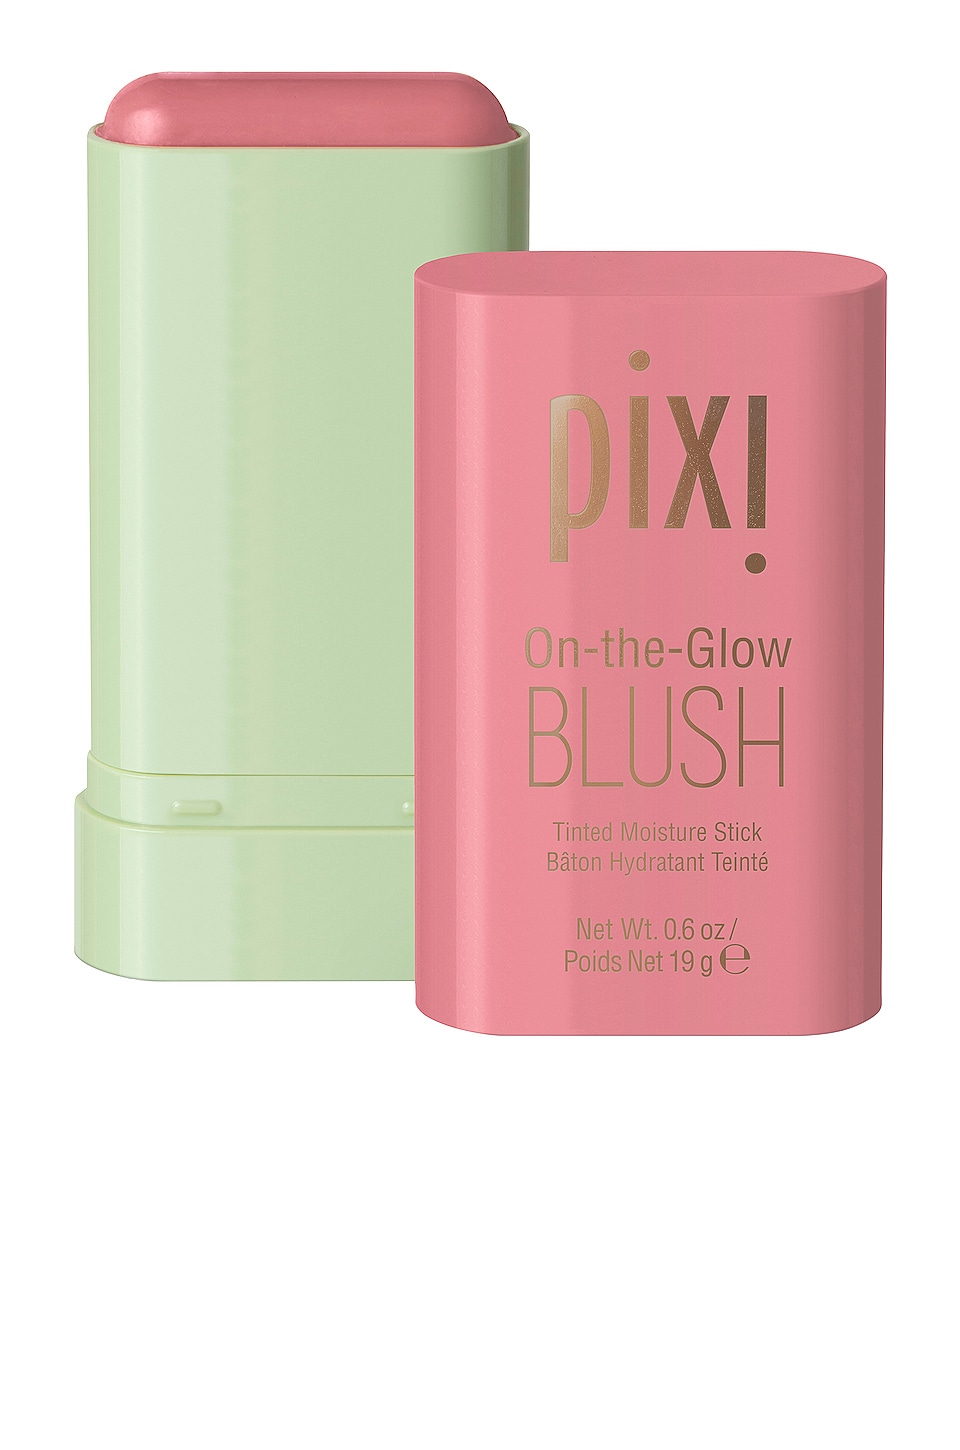 Румяна Pixi On-The-Glow Blush, цвет Fleur